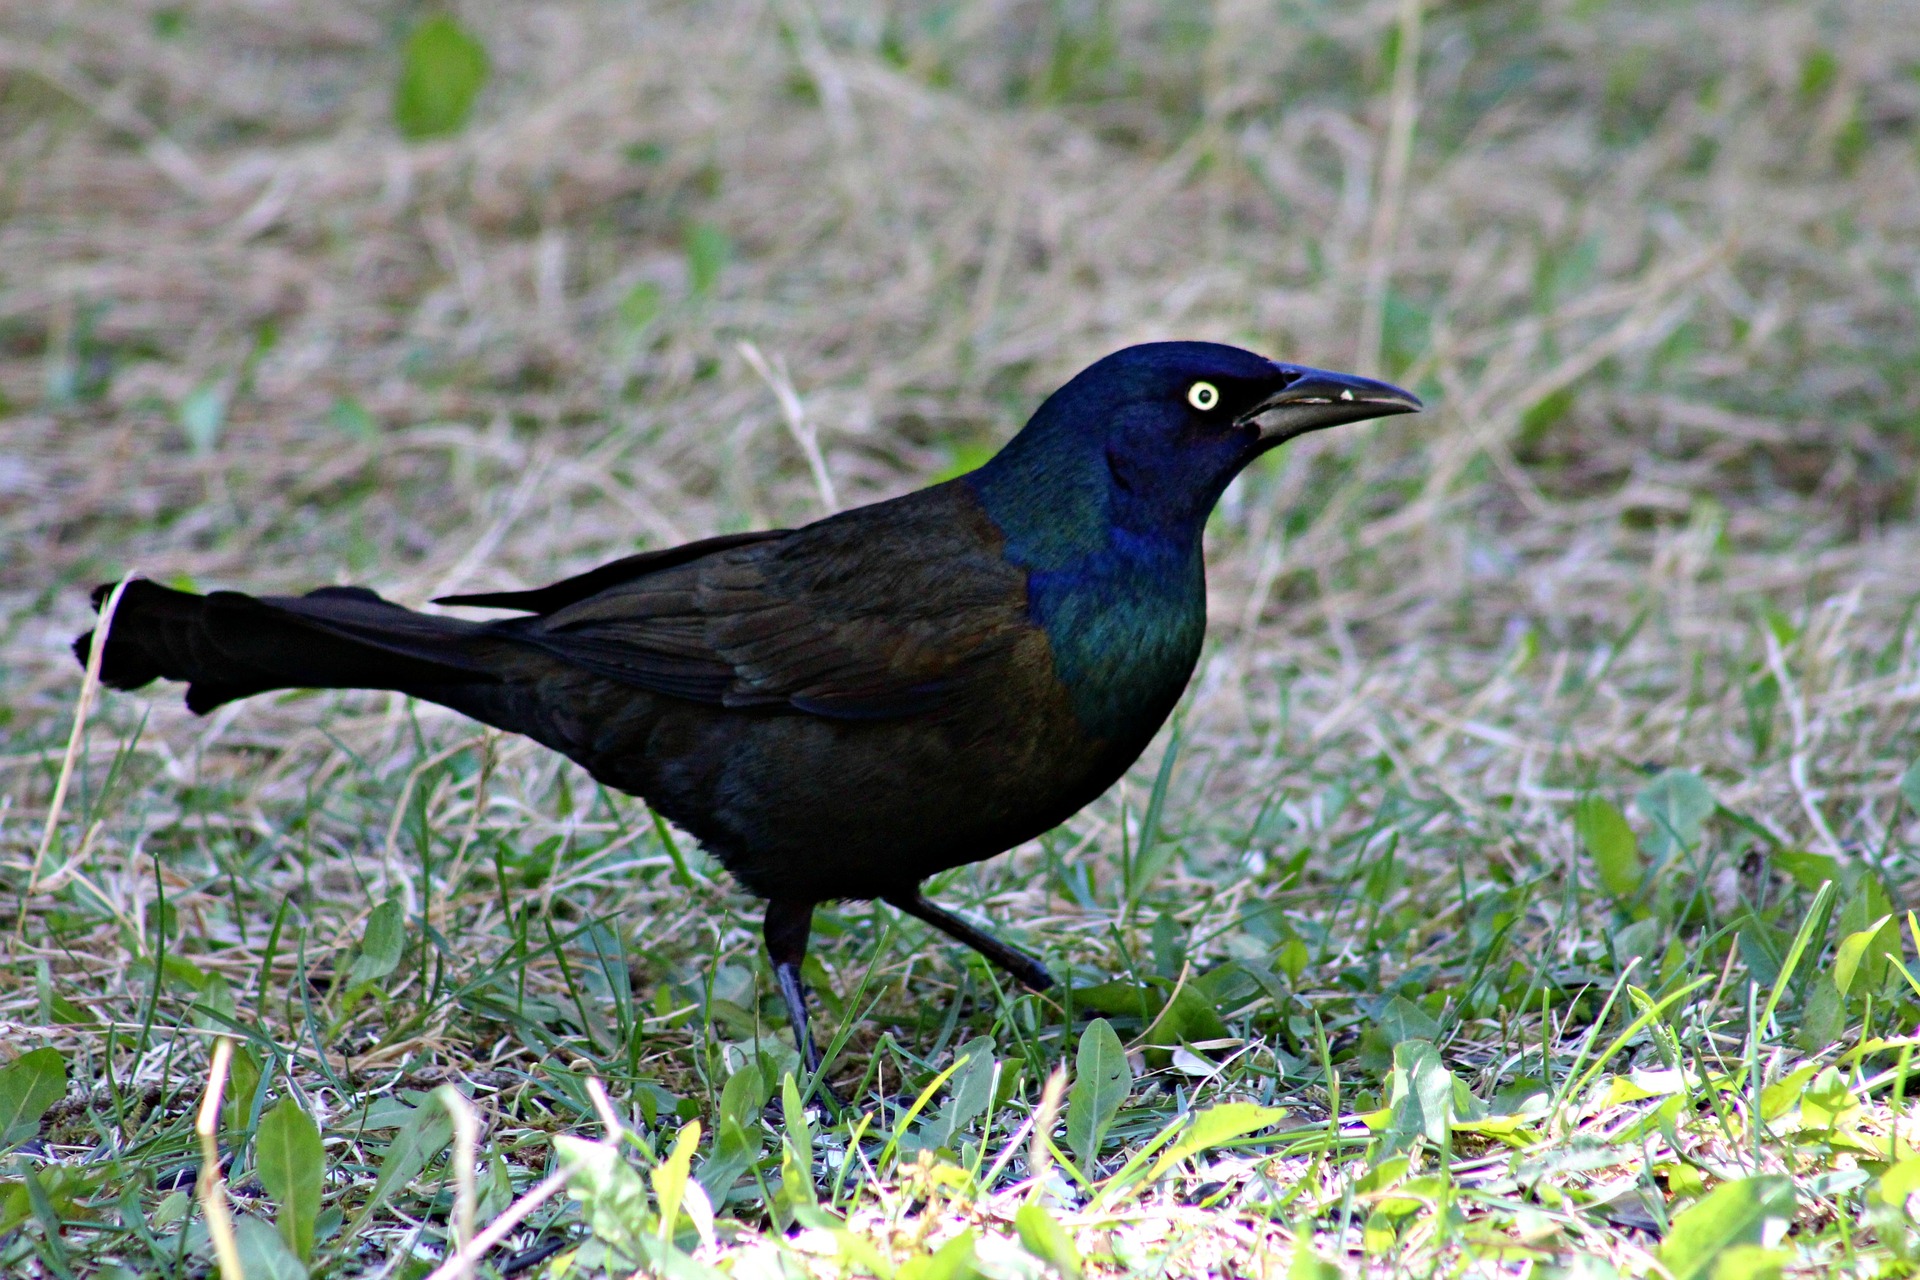 common grackle - do blackbirds migrate